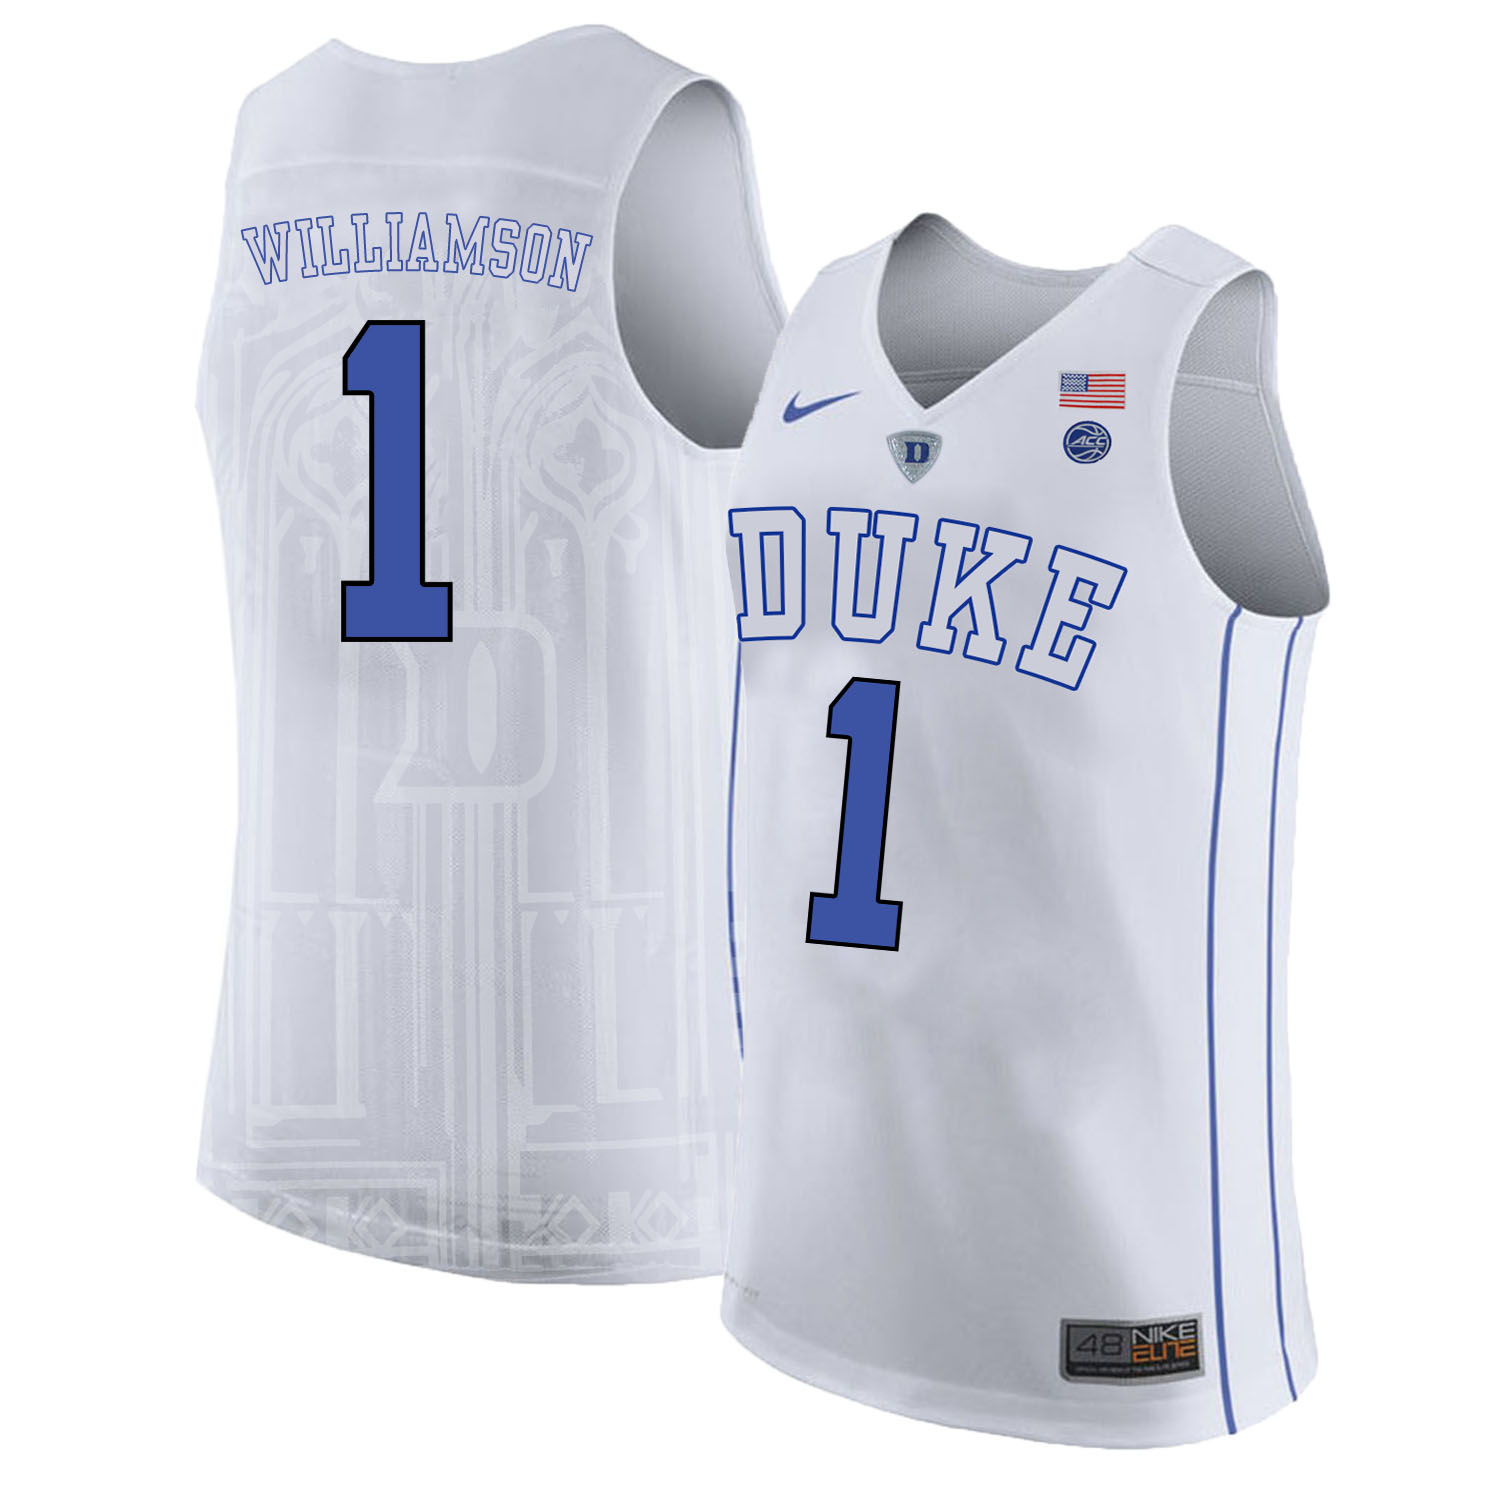 Duke Blue Devils 1 Zion Williamson White Nike College Basketabll Jersey